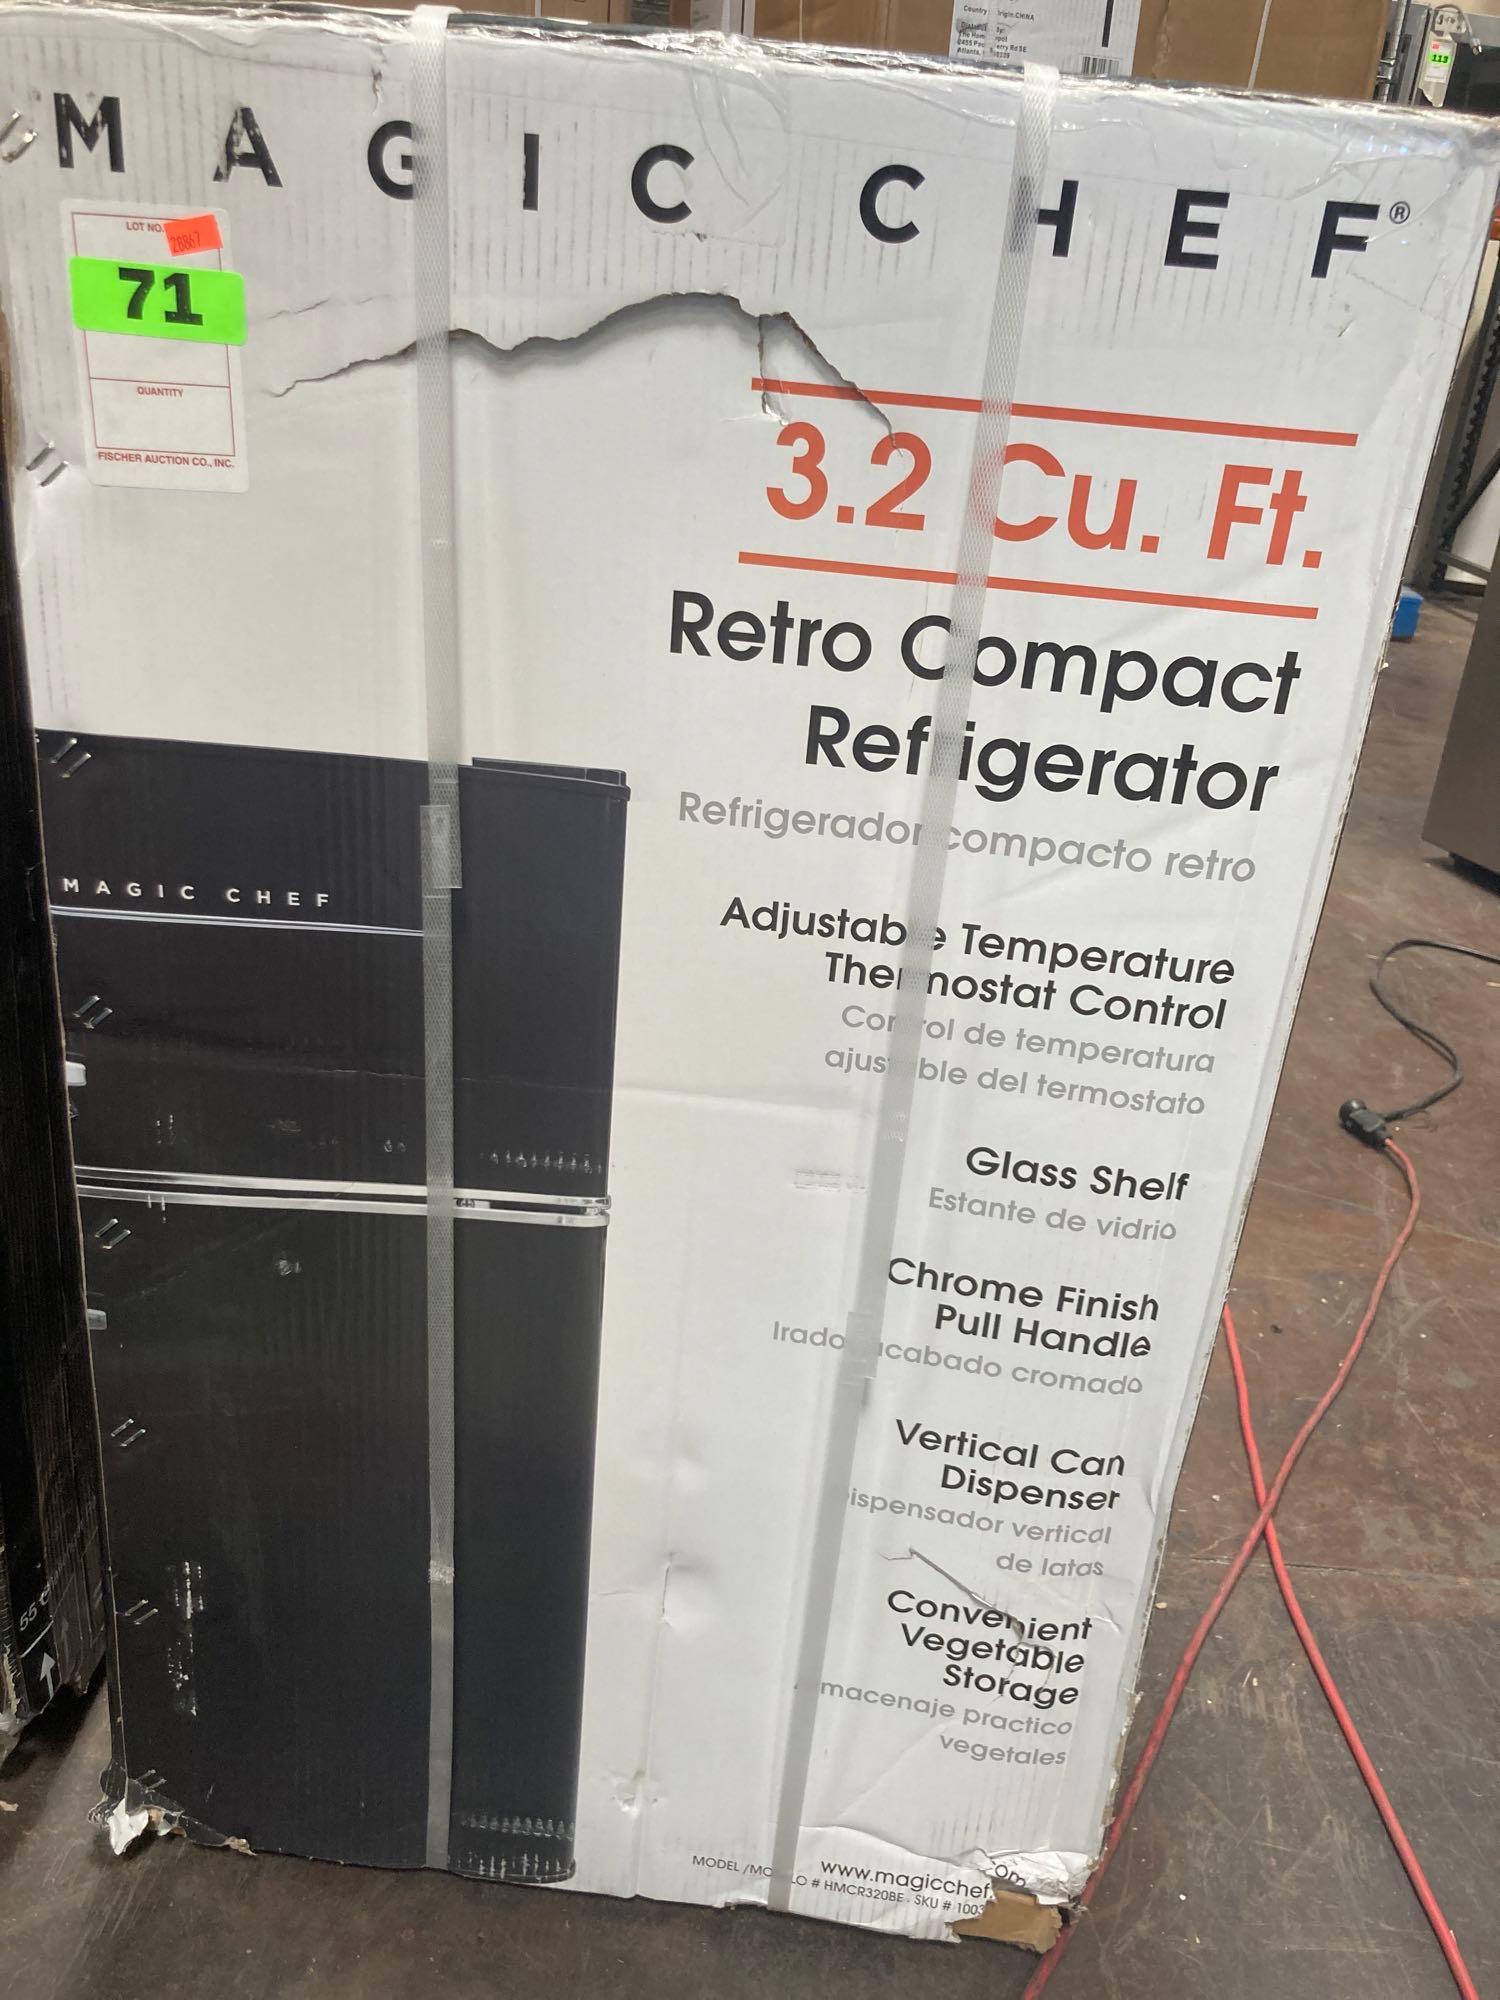 HMCR320BE by Magic Chef - 3.2 Cu. Ft. Retro 2-Door Refrigerator